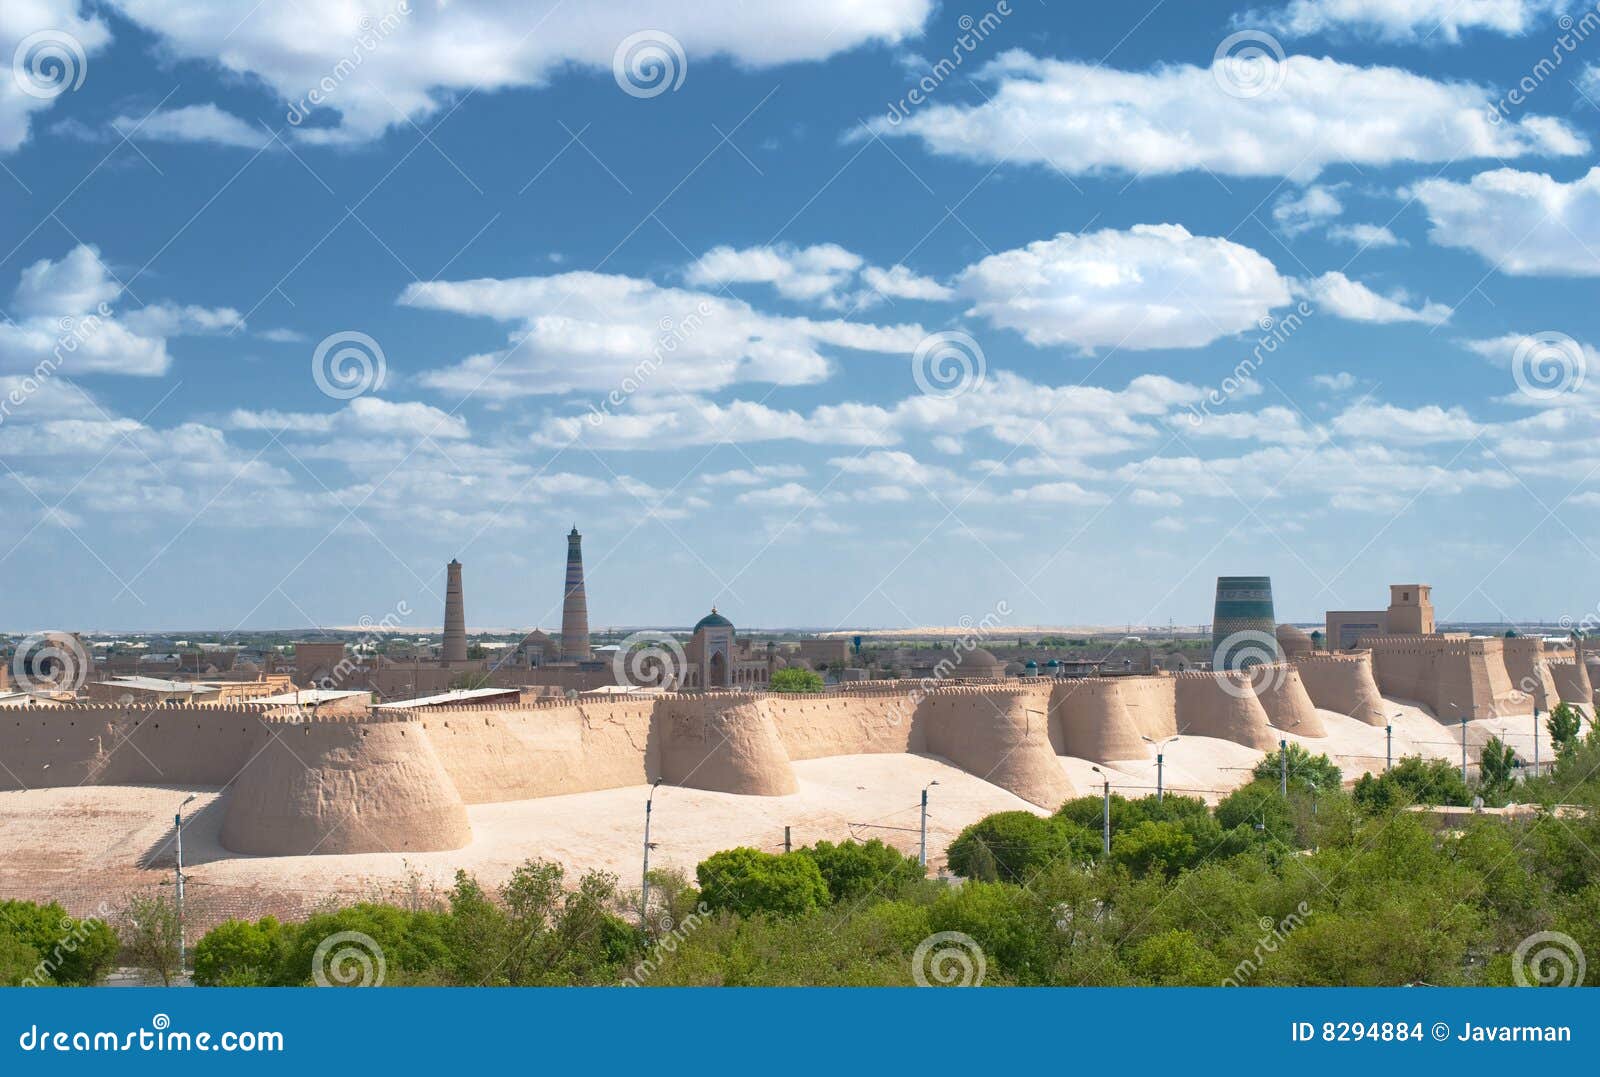 panorama of an ancient city of khiva, uzbekistan